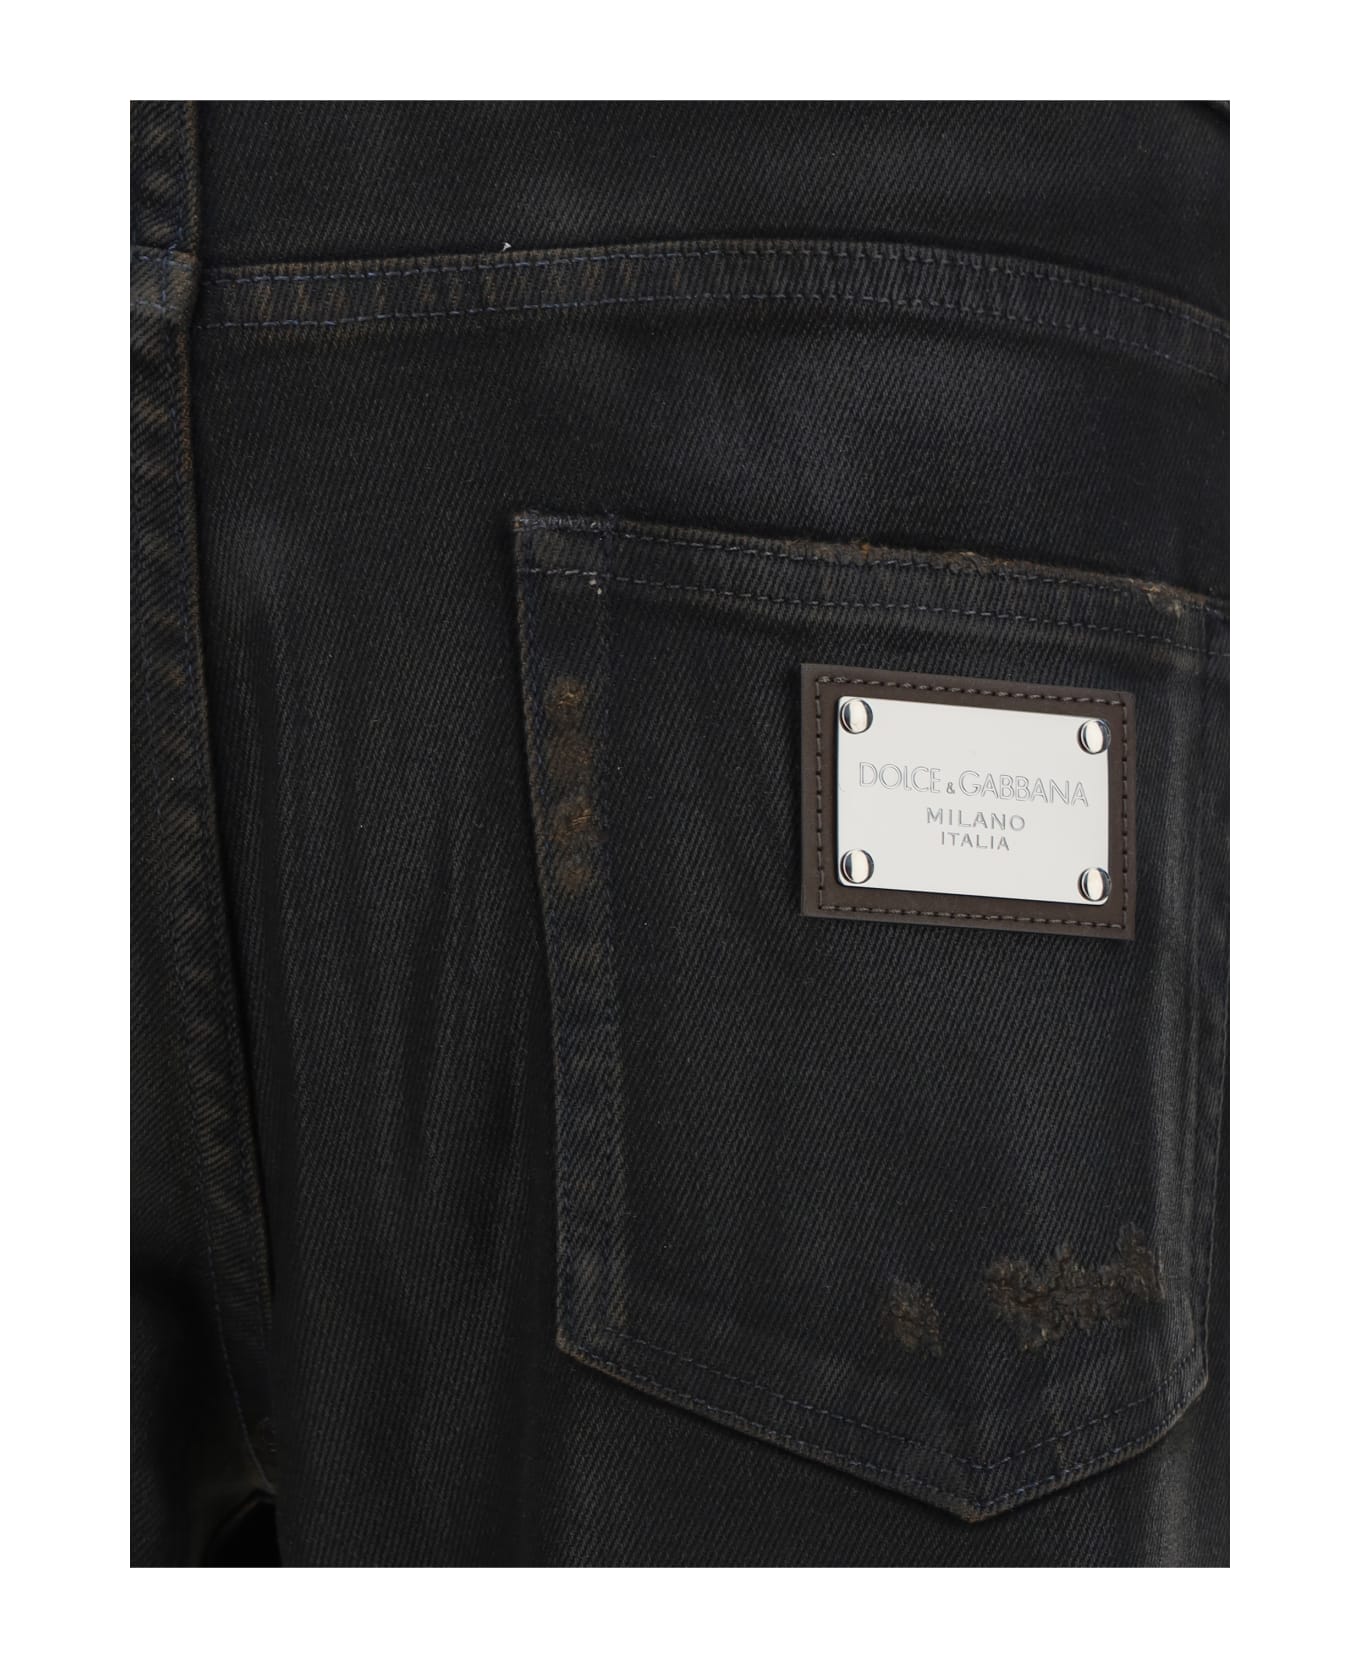 Dolce & Gabbana Slim Fit Jeans - Variante Abbinata ボトムス